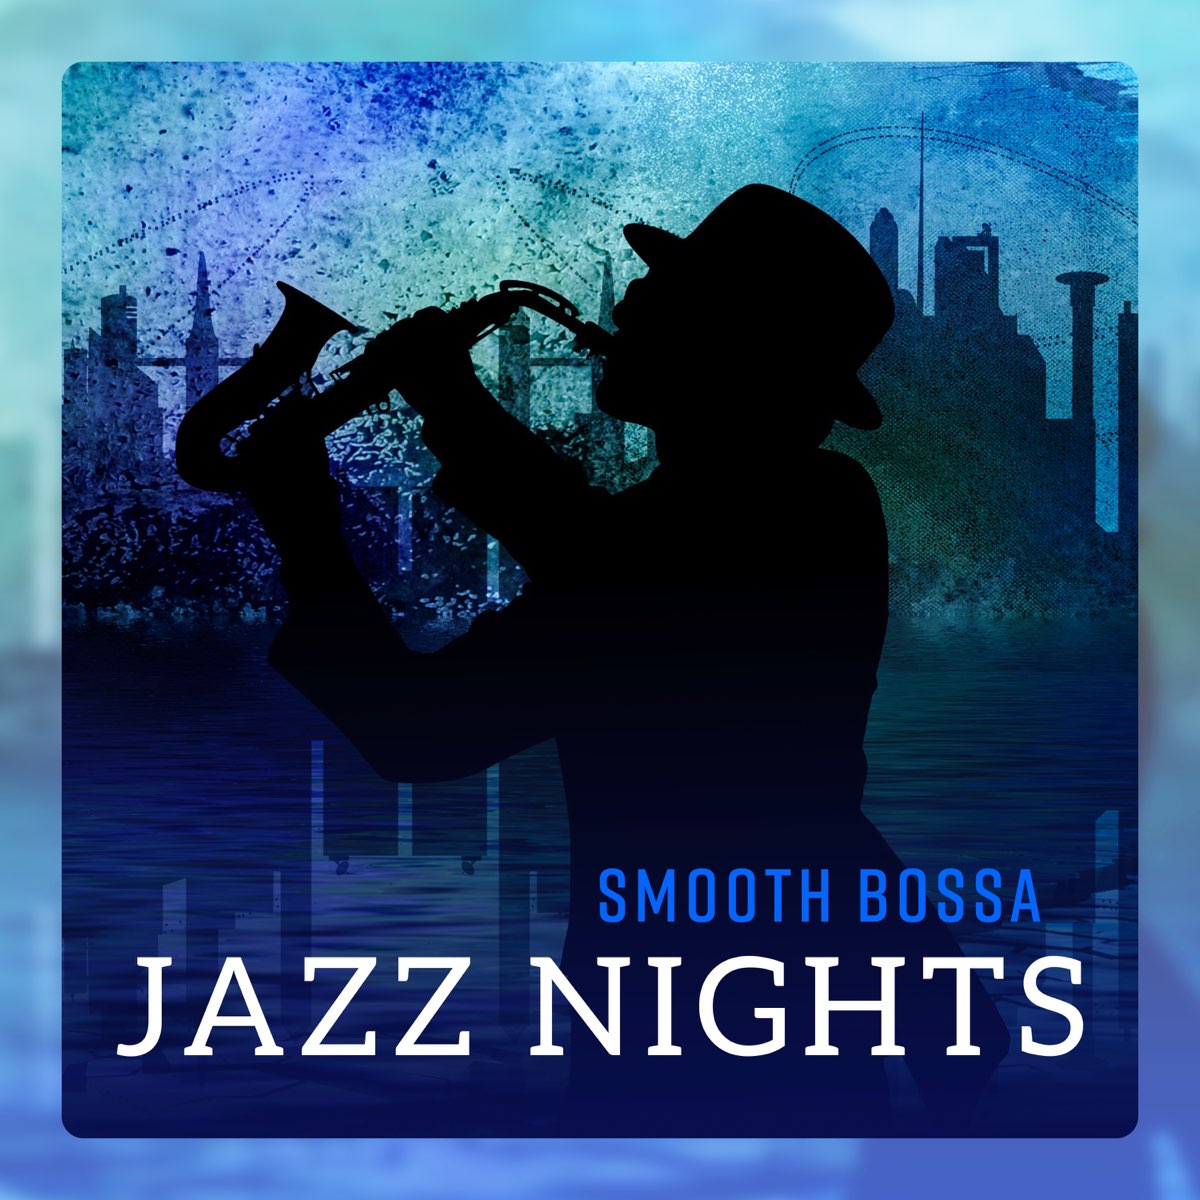 Любимый джаз слушать. Ночь джаза. Джаз инструментал. Night Jazz Music album. Relaxing Soothing Jazz chilly Jams playlist.